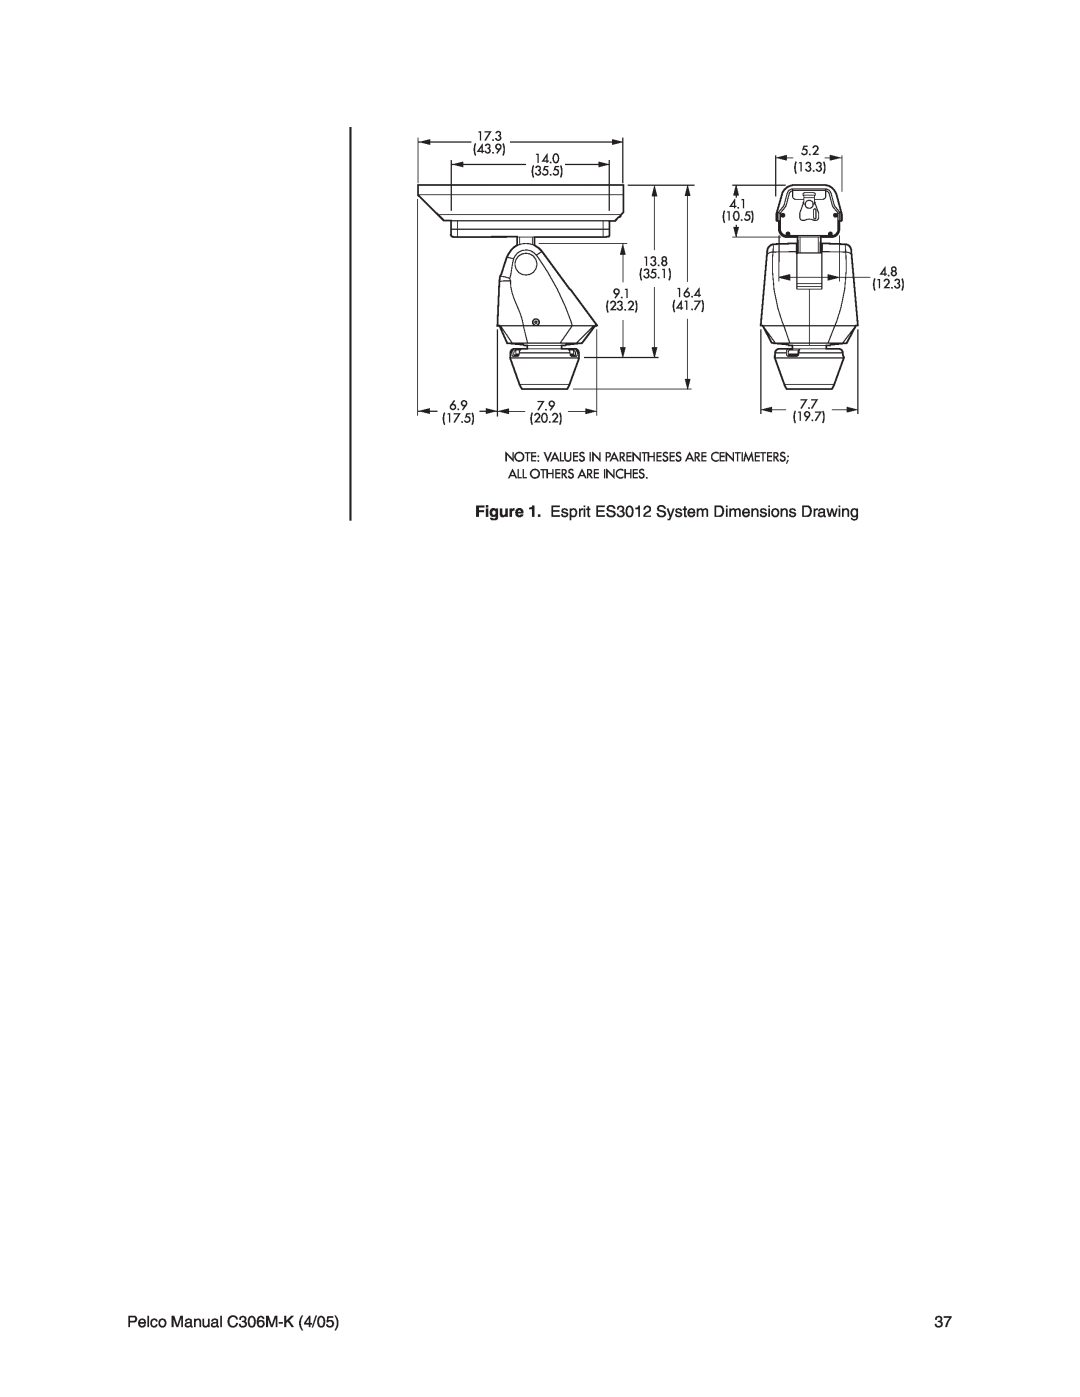 Pelco es3012 installation manual Esprit ES3012 System Dimensions Drawing, Pelco Manual C306M-K4/05 